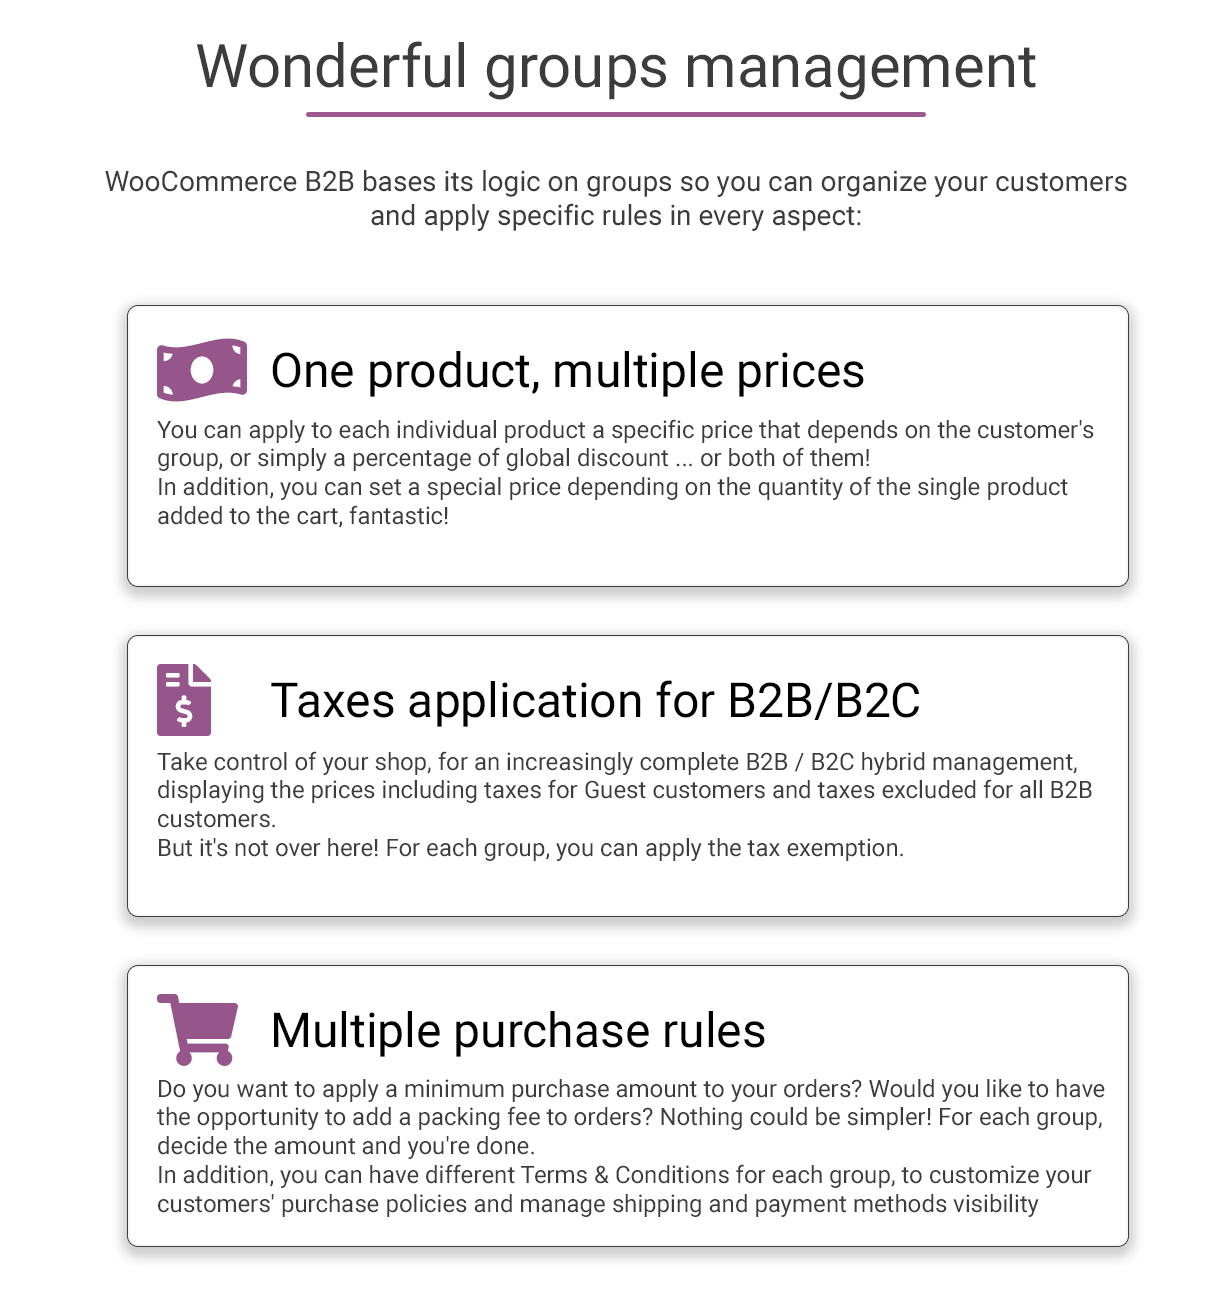 WooCommerce B2B - Groups management